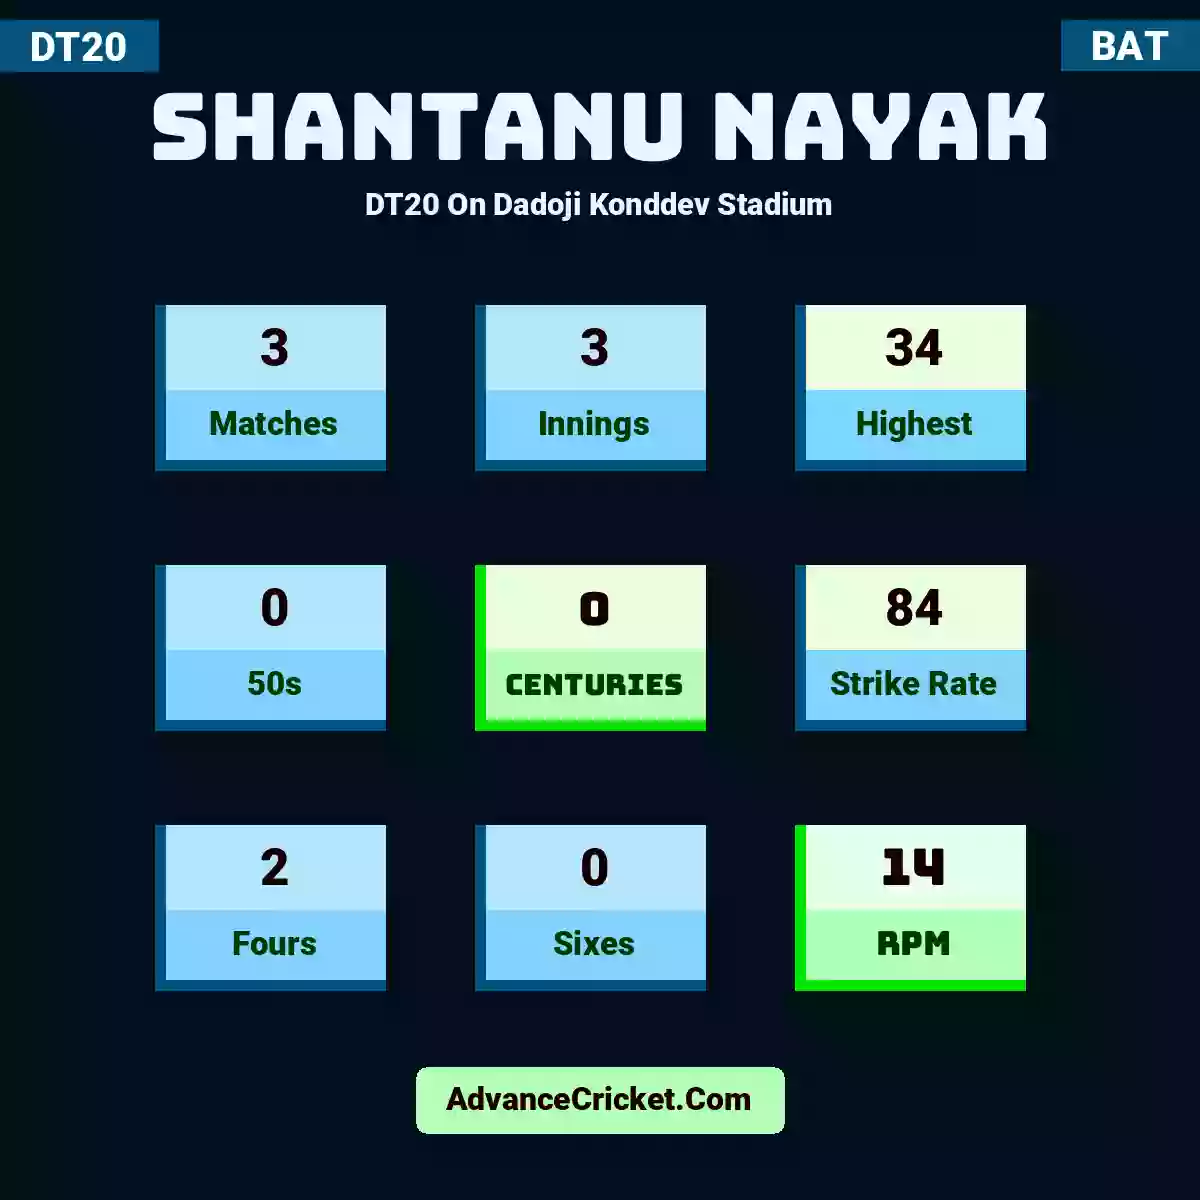 Shantanu Nayak DT20  On Dadoji Konddev Stadium, Shantanu Nayak played 3 matches, scored 34 runs as highest, 0 half-centuries, and 0 centuries, with a strike rate of 84. S.Nayak hit 2 fours and 0 sixes, with an RPM of 14.